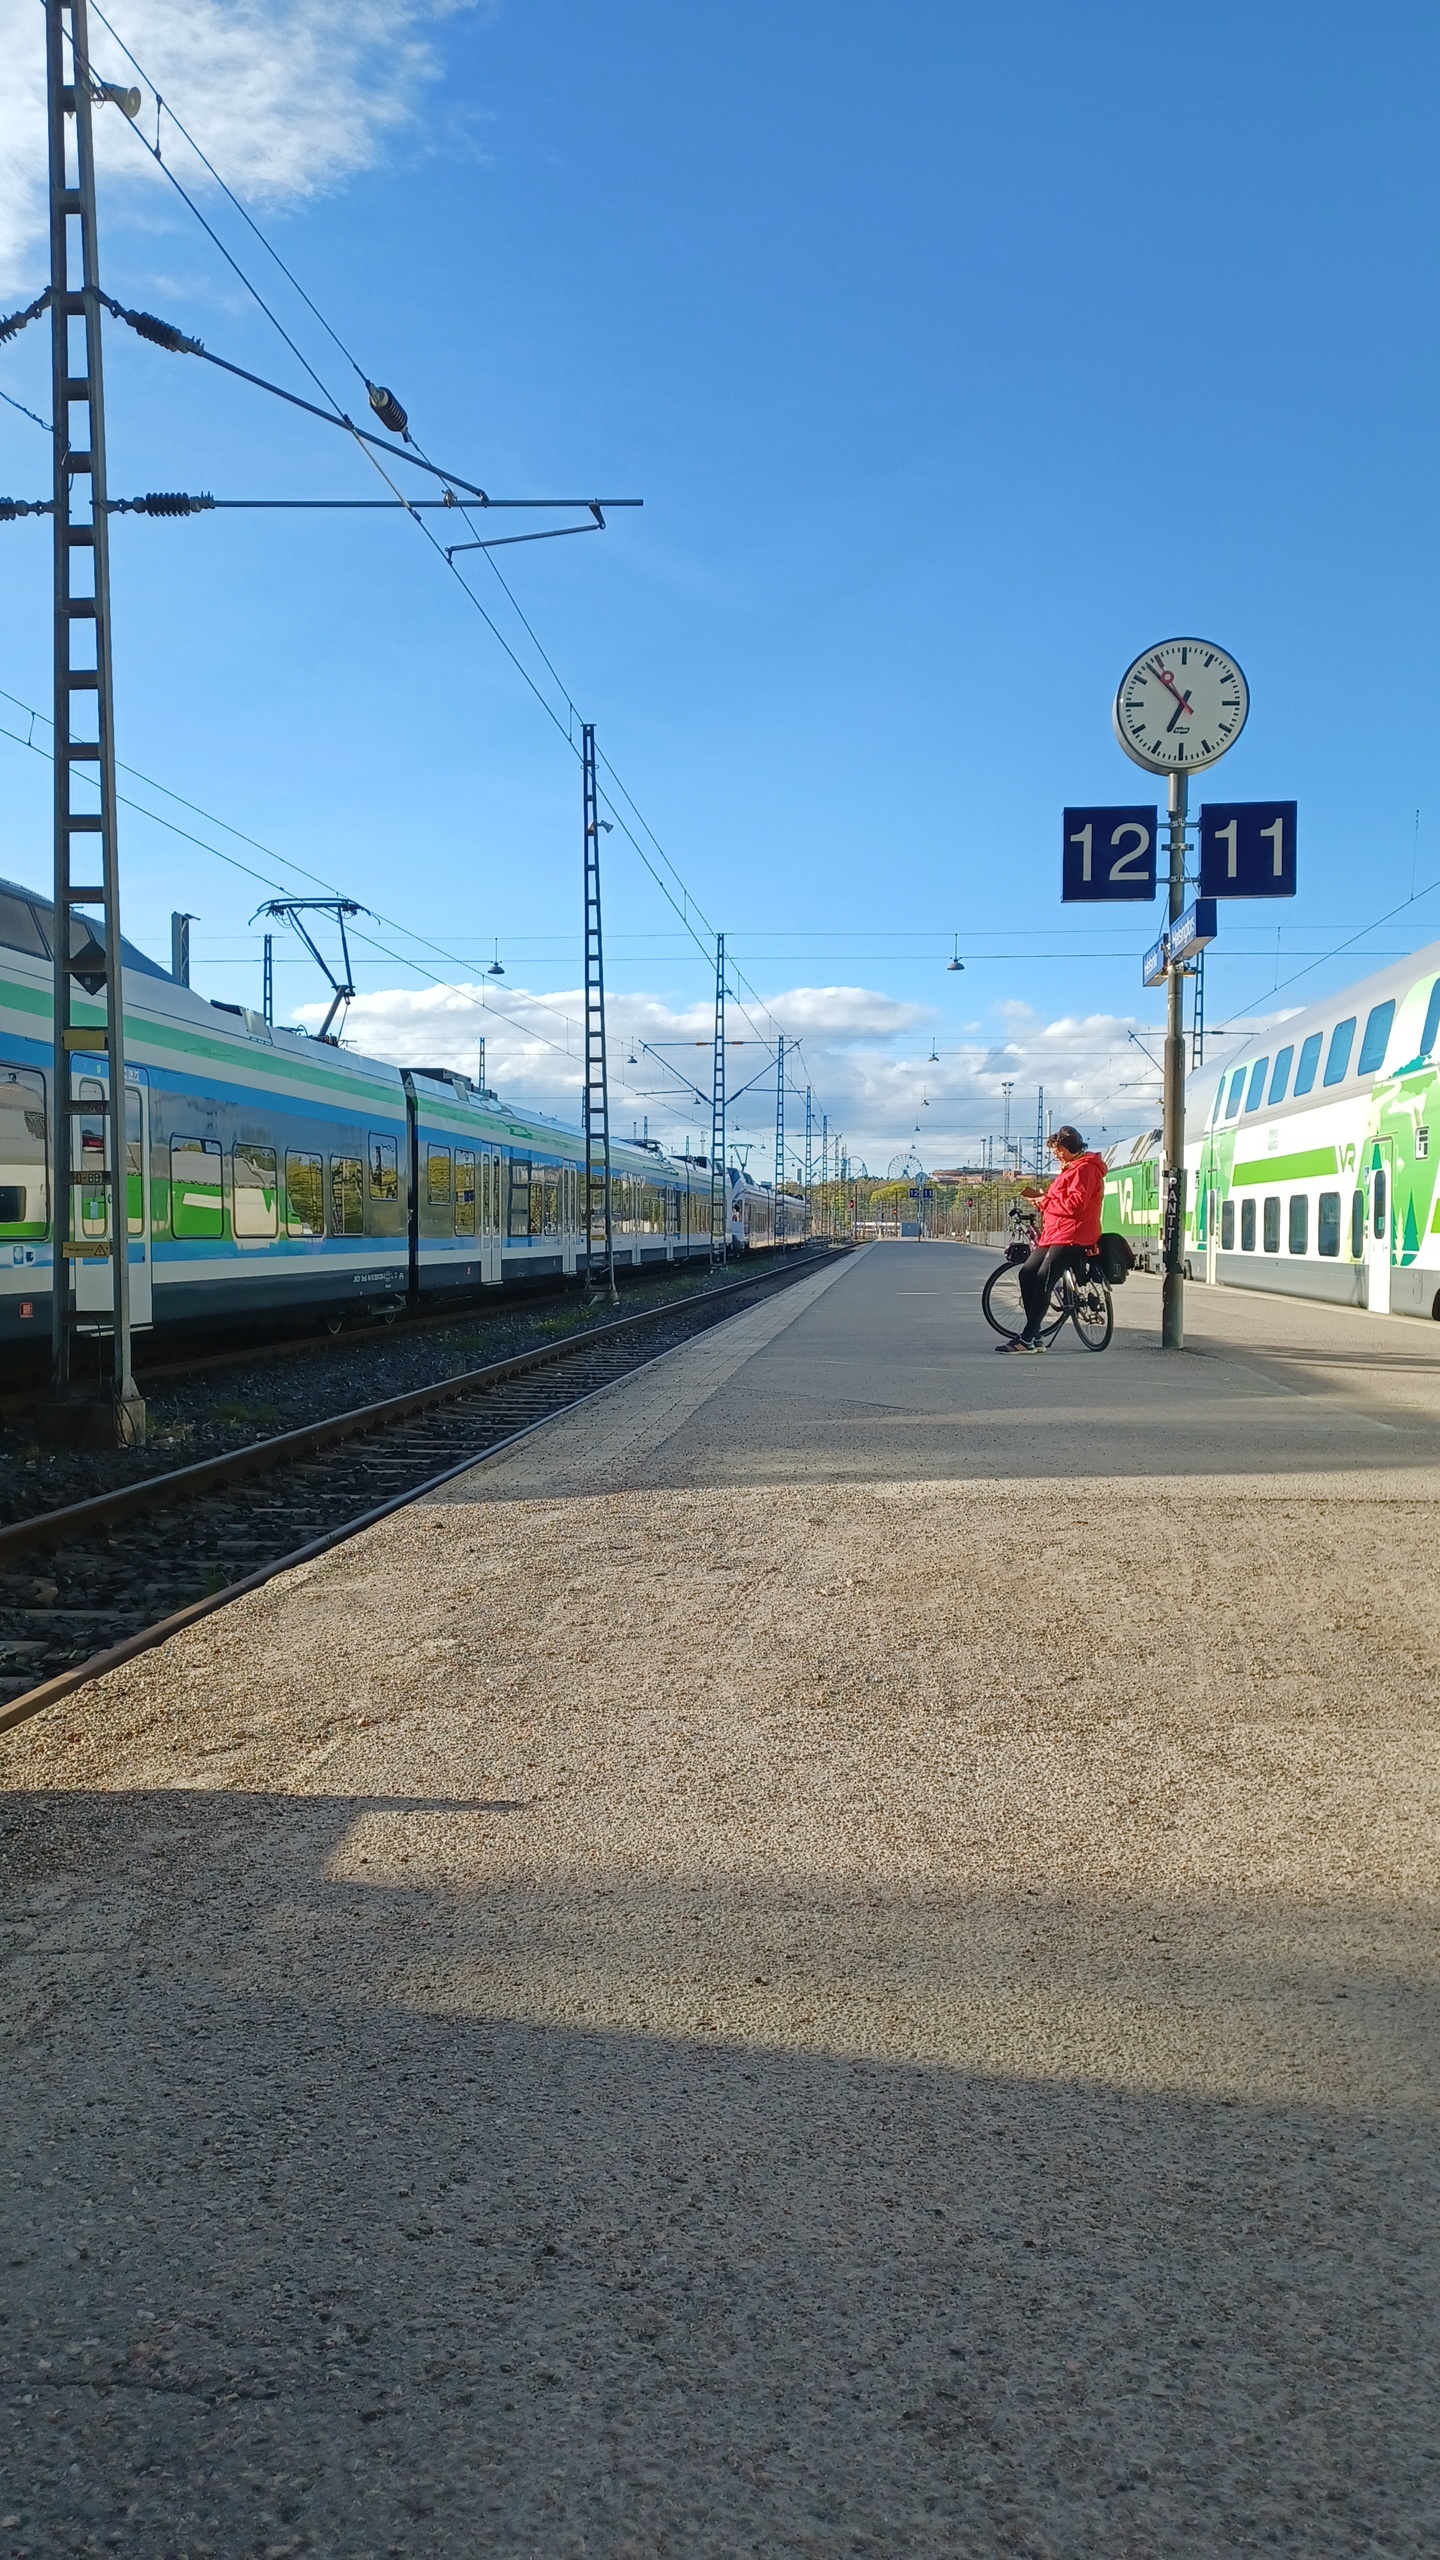 Matkustajia ja juna Helsingin rautatieasemalla. rephoto